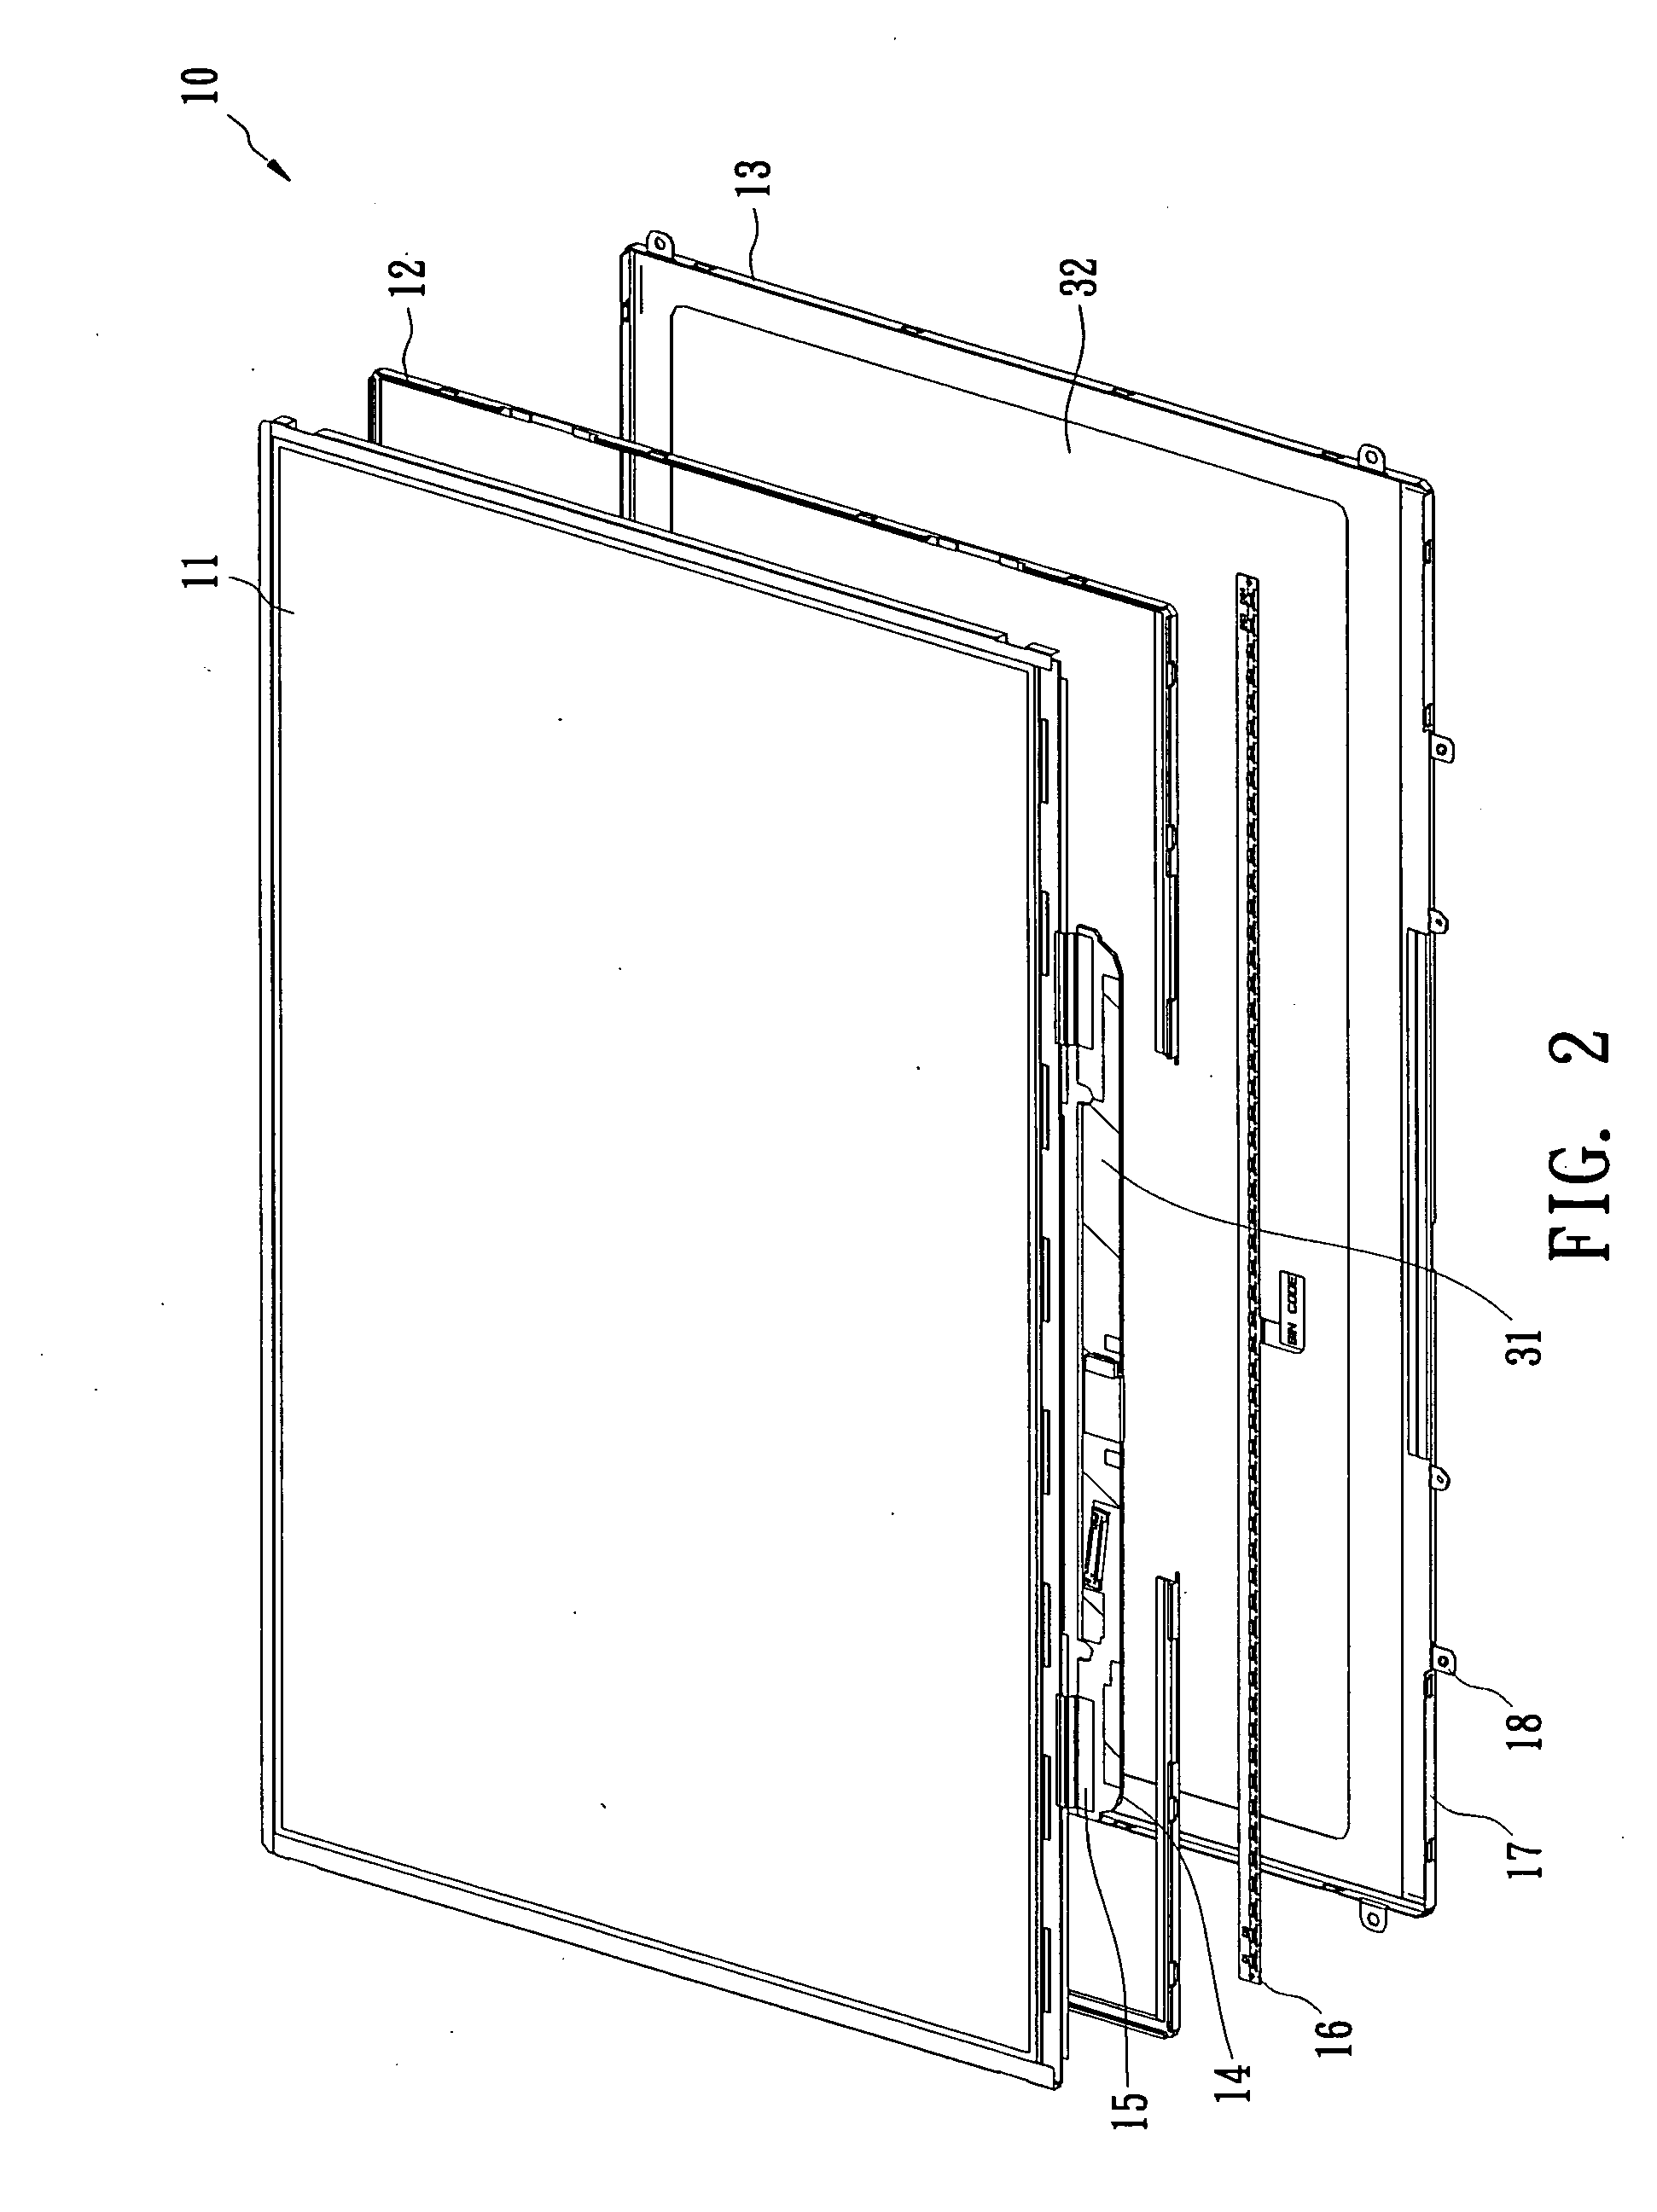 Display panel apparatus